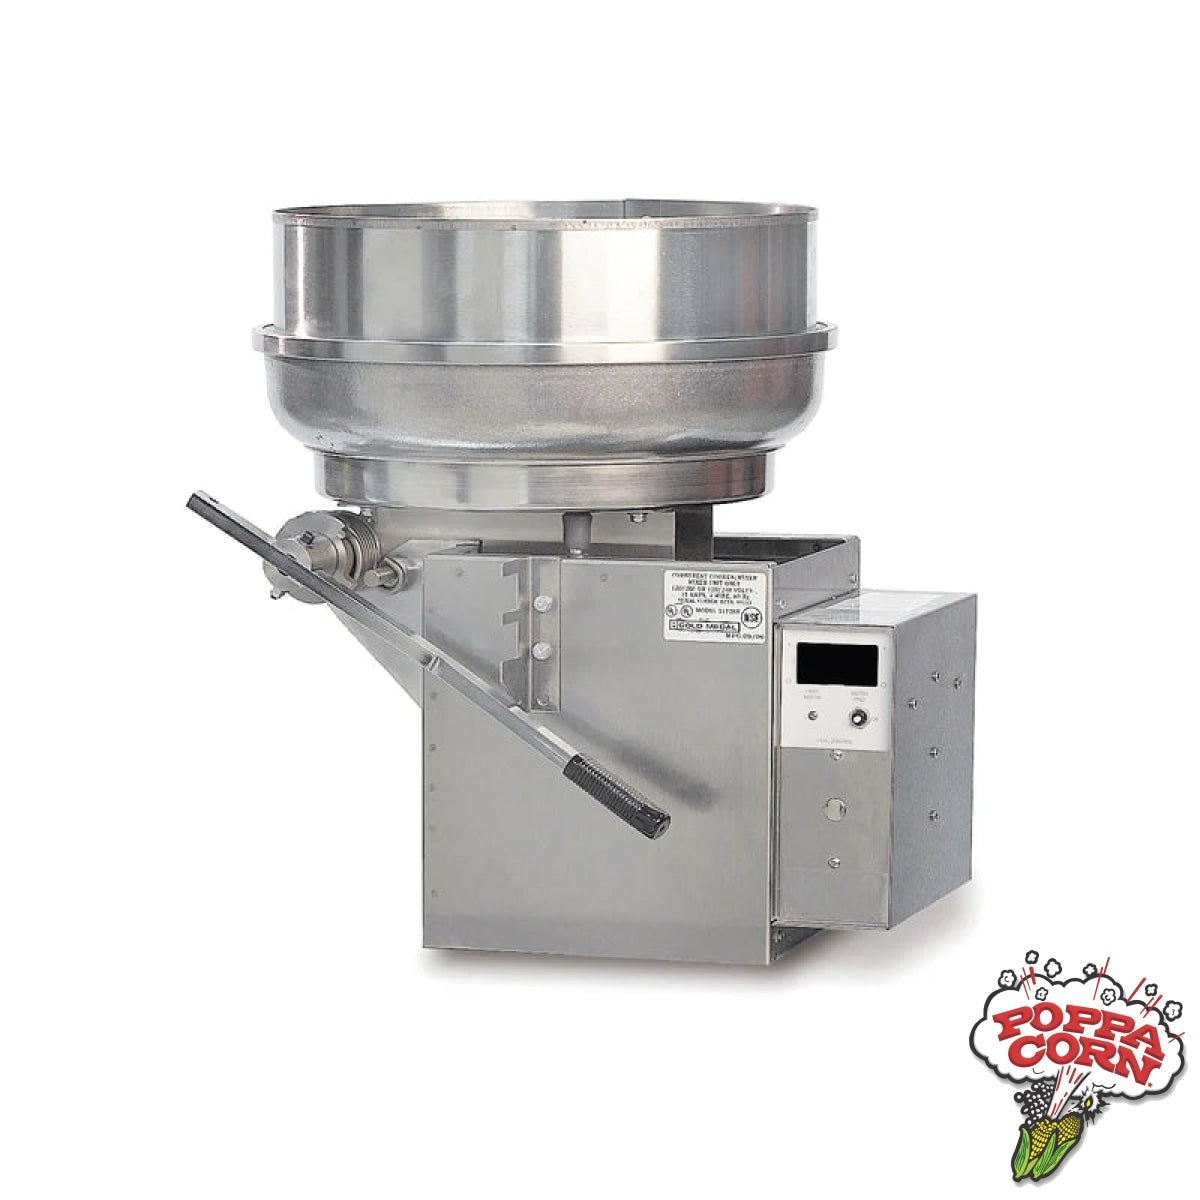 Pralinator Frosted Nut Machine (RH Dump) - GM2181ER - Poppa Corn Corp